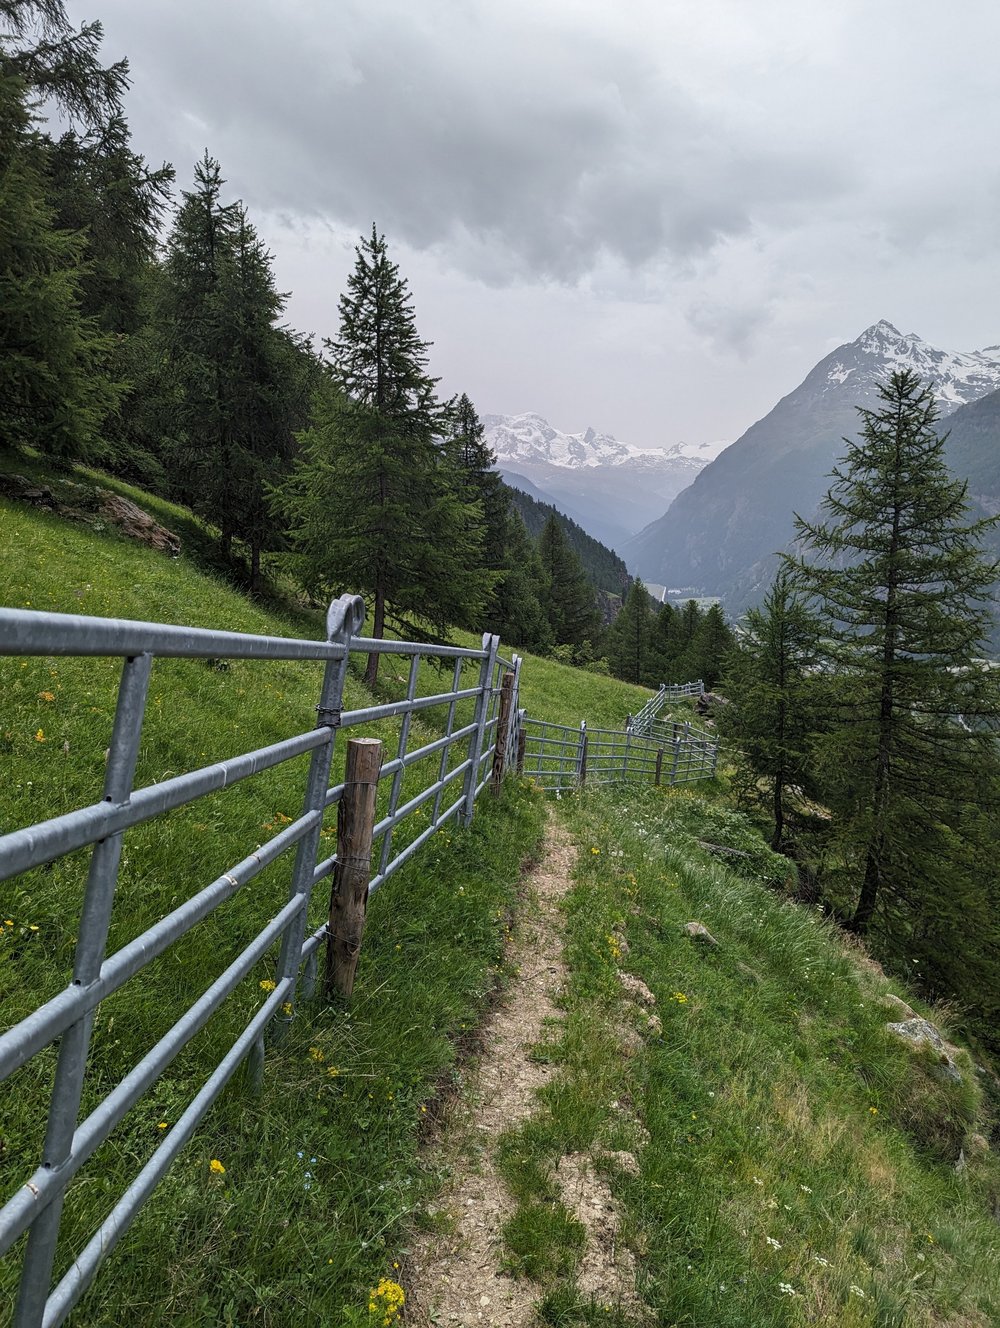 Fence for livestock grazing in the Alpine meadow alongside the Europaweg